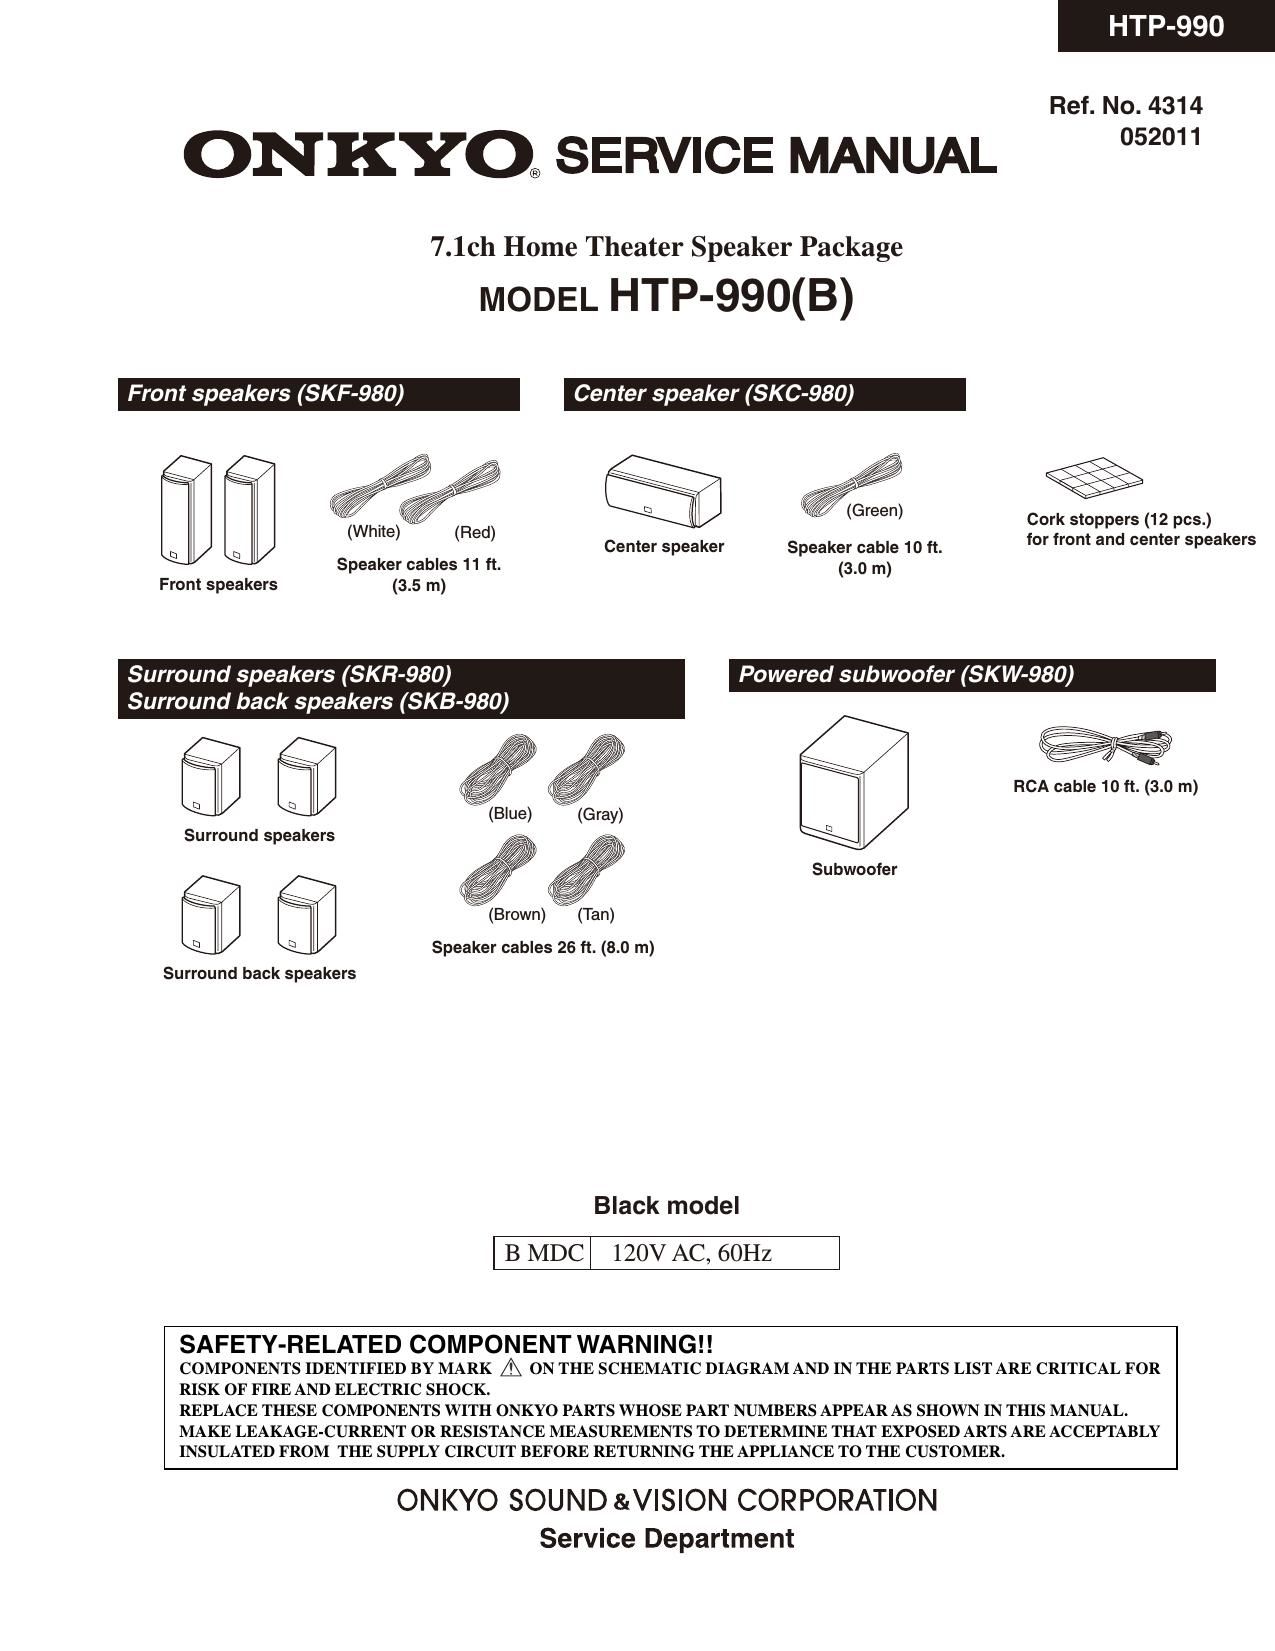 Onkyo HTP 990 Service Manual 2